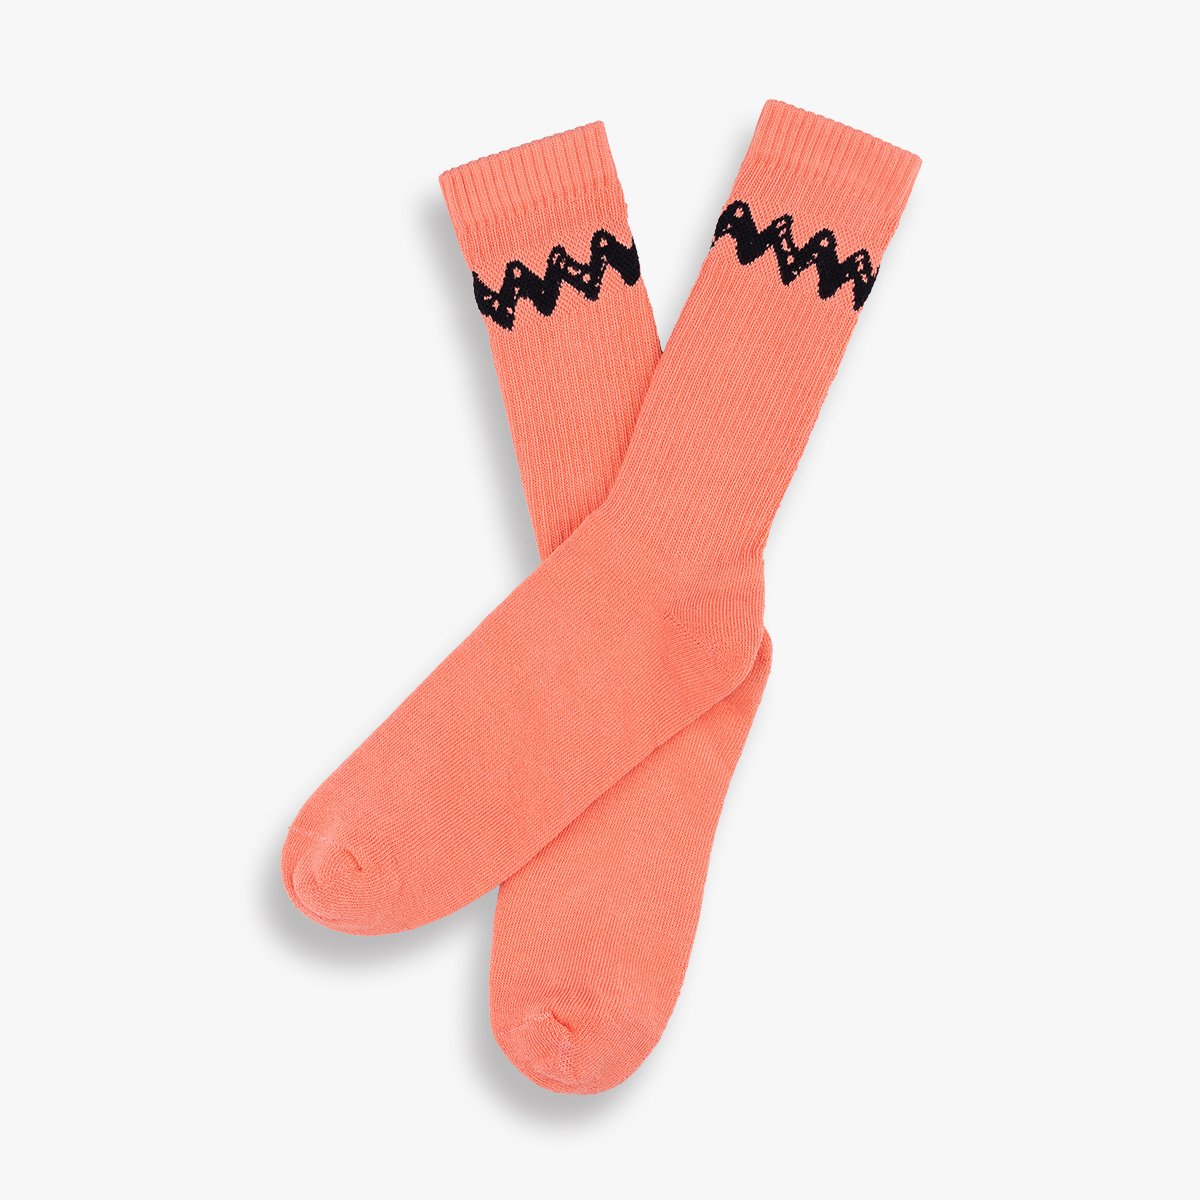 Charlie Brown Socks - Peach